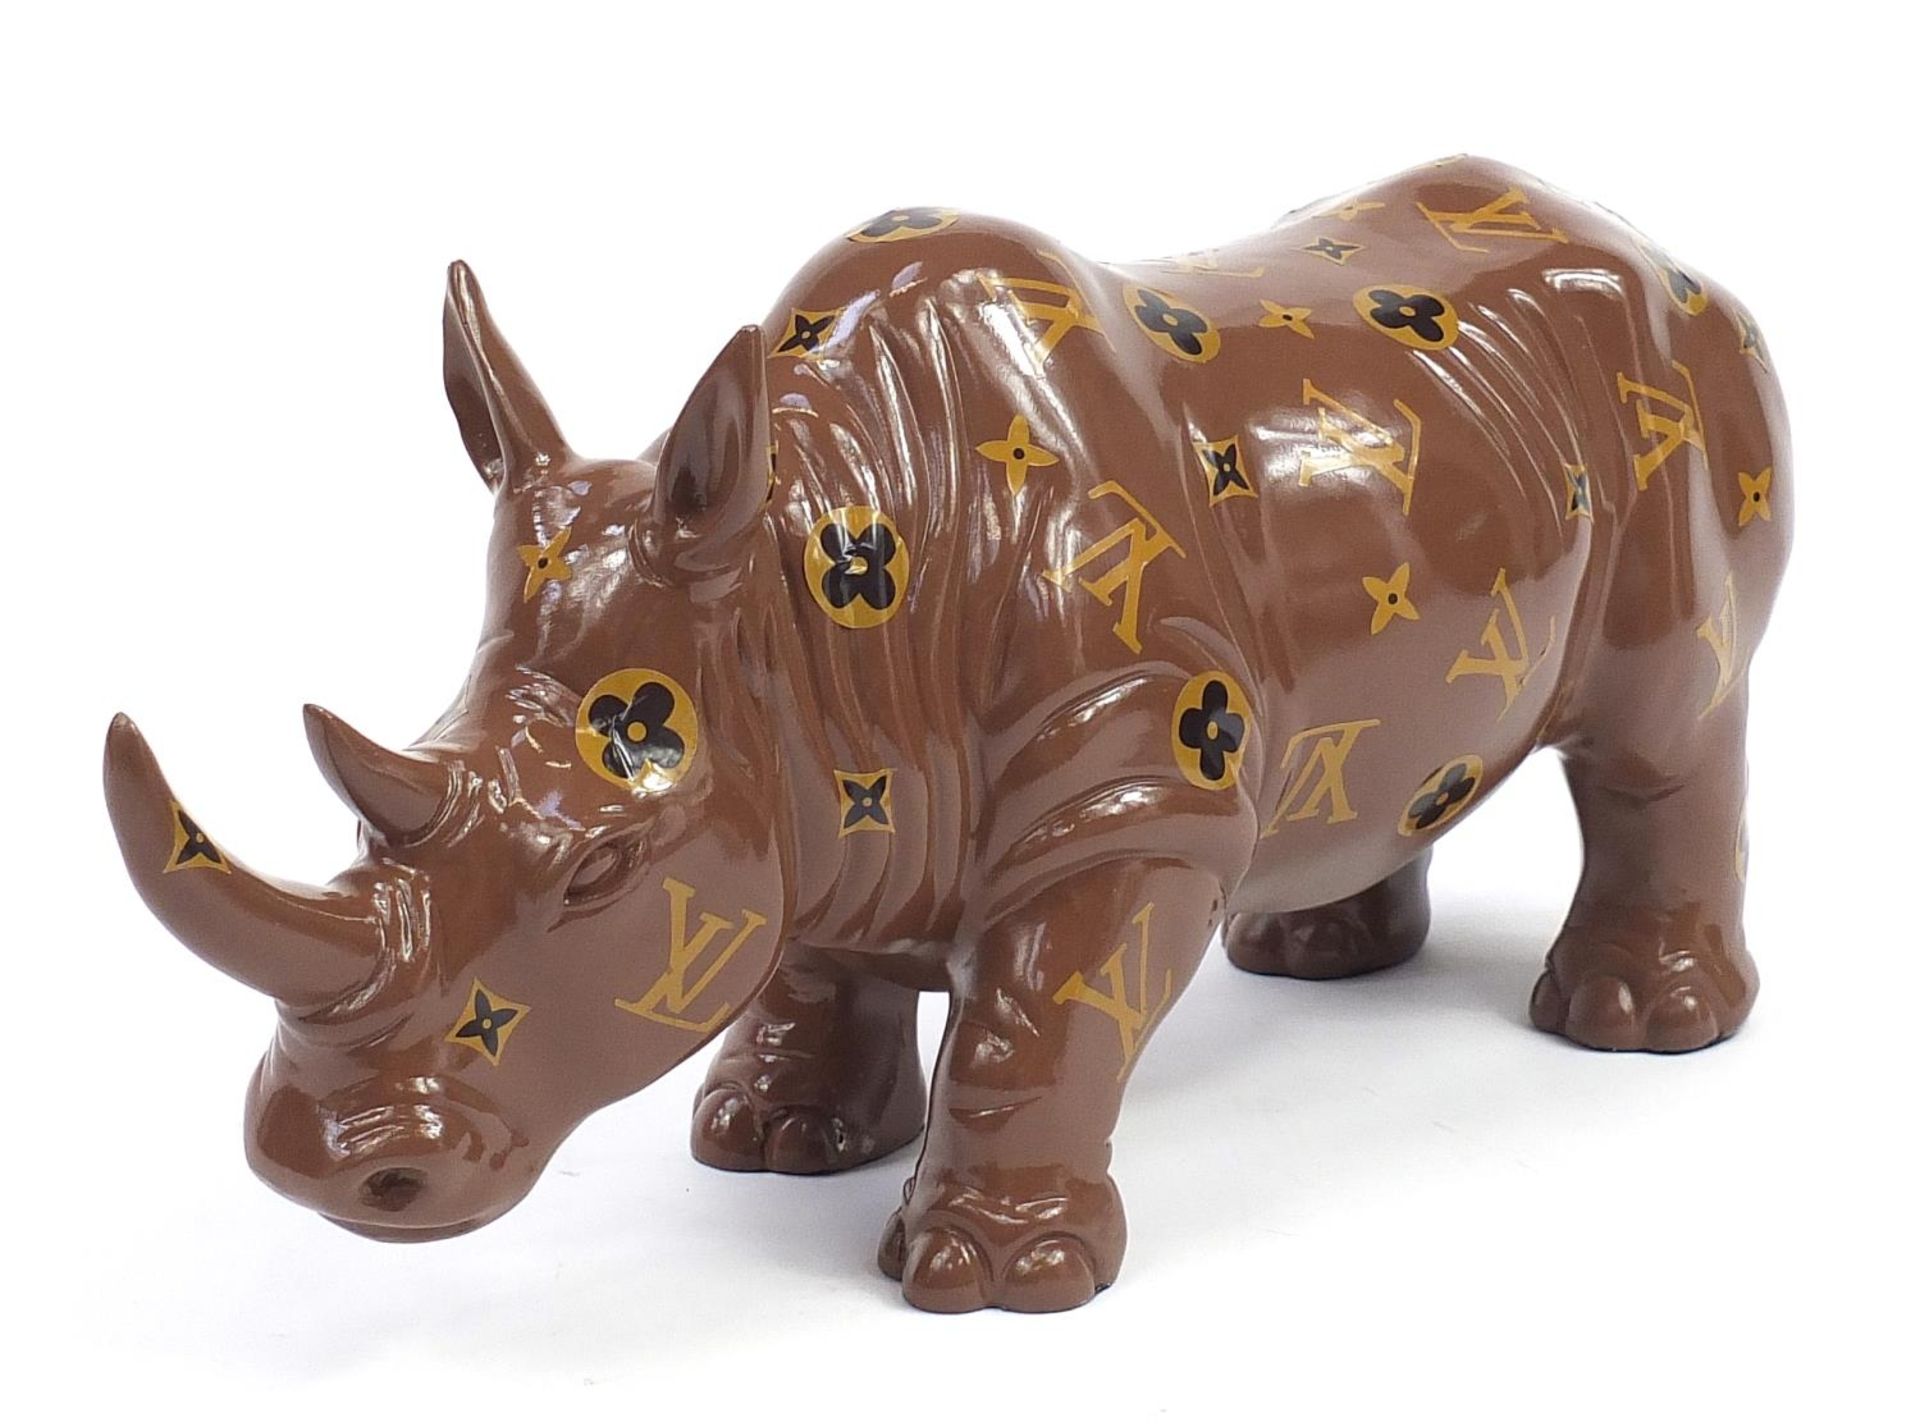 Louise Vuitton style rhinoceros, 51cm in length